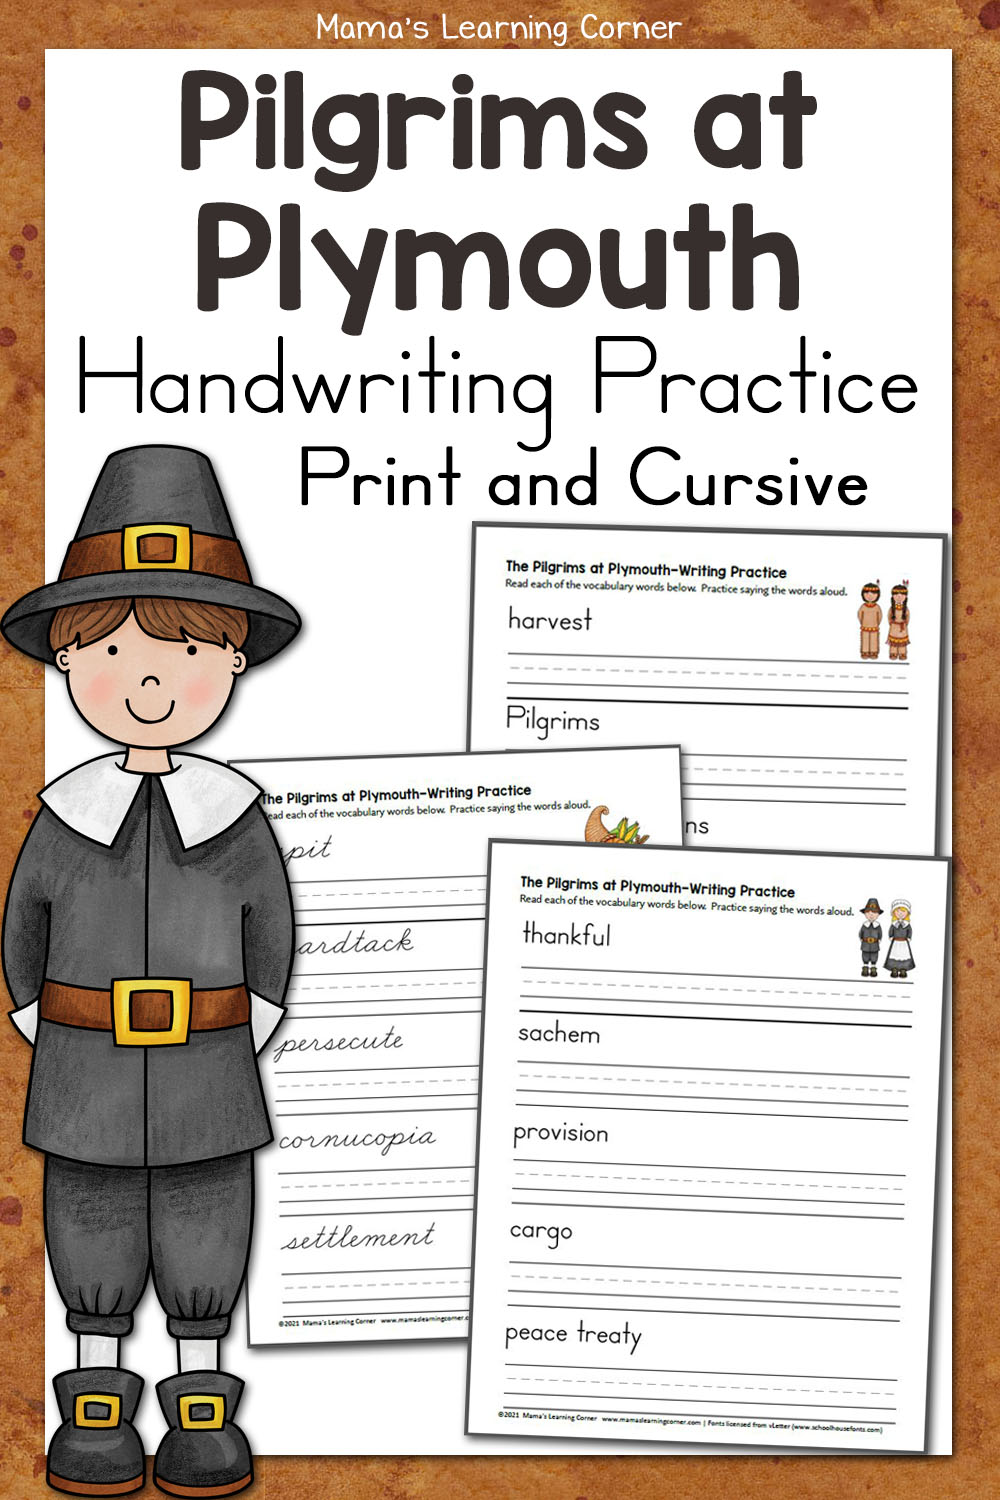 pilgrims-handwriting-practice-worksheets-mamas-learning-corner